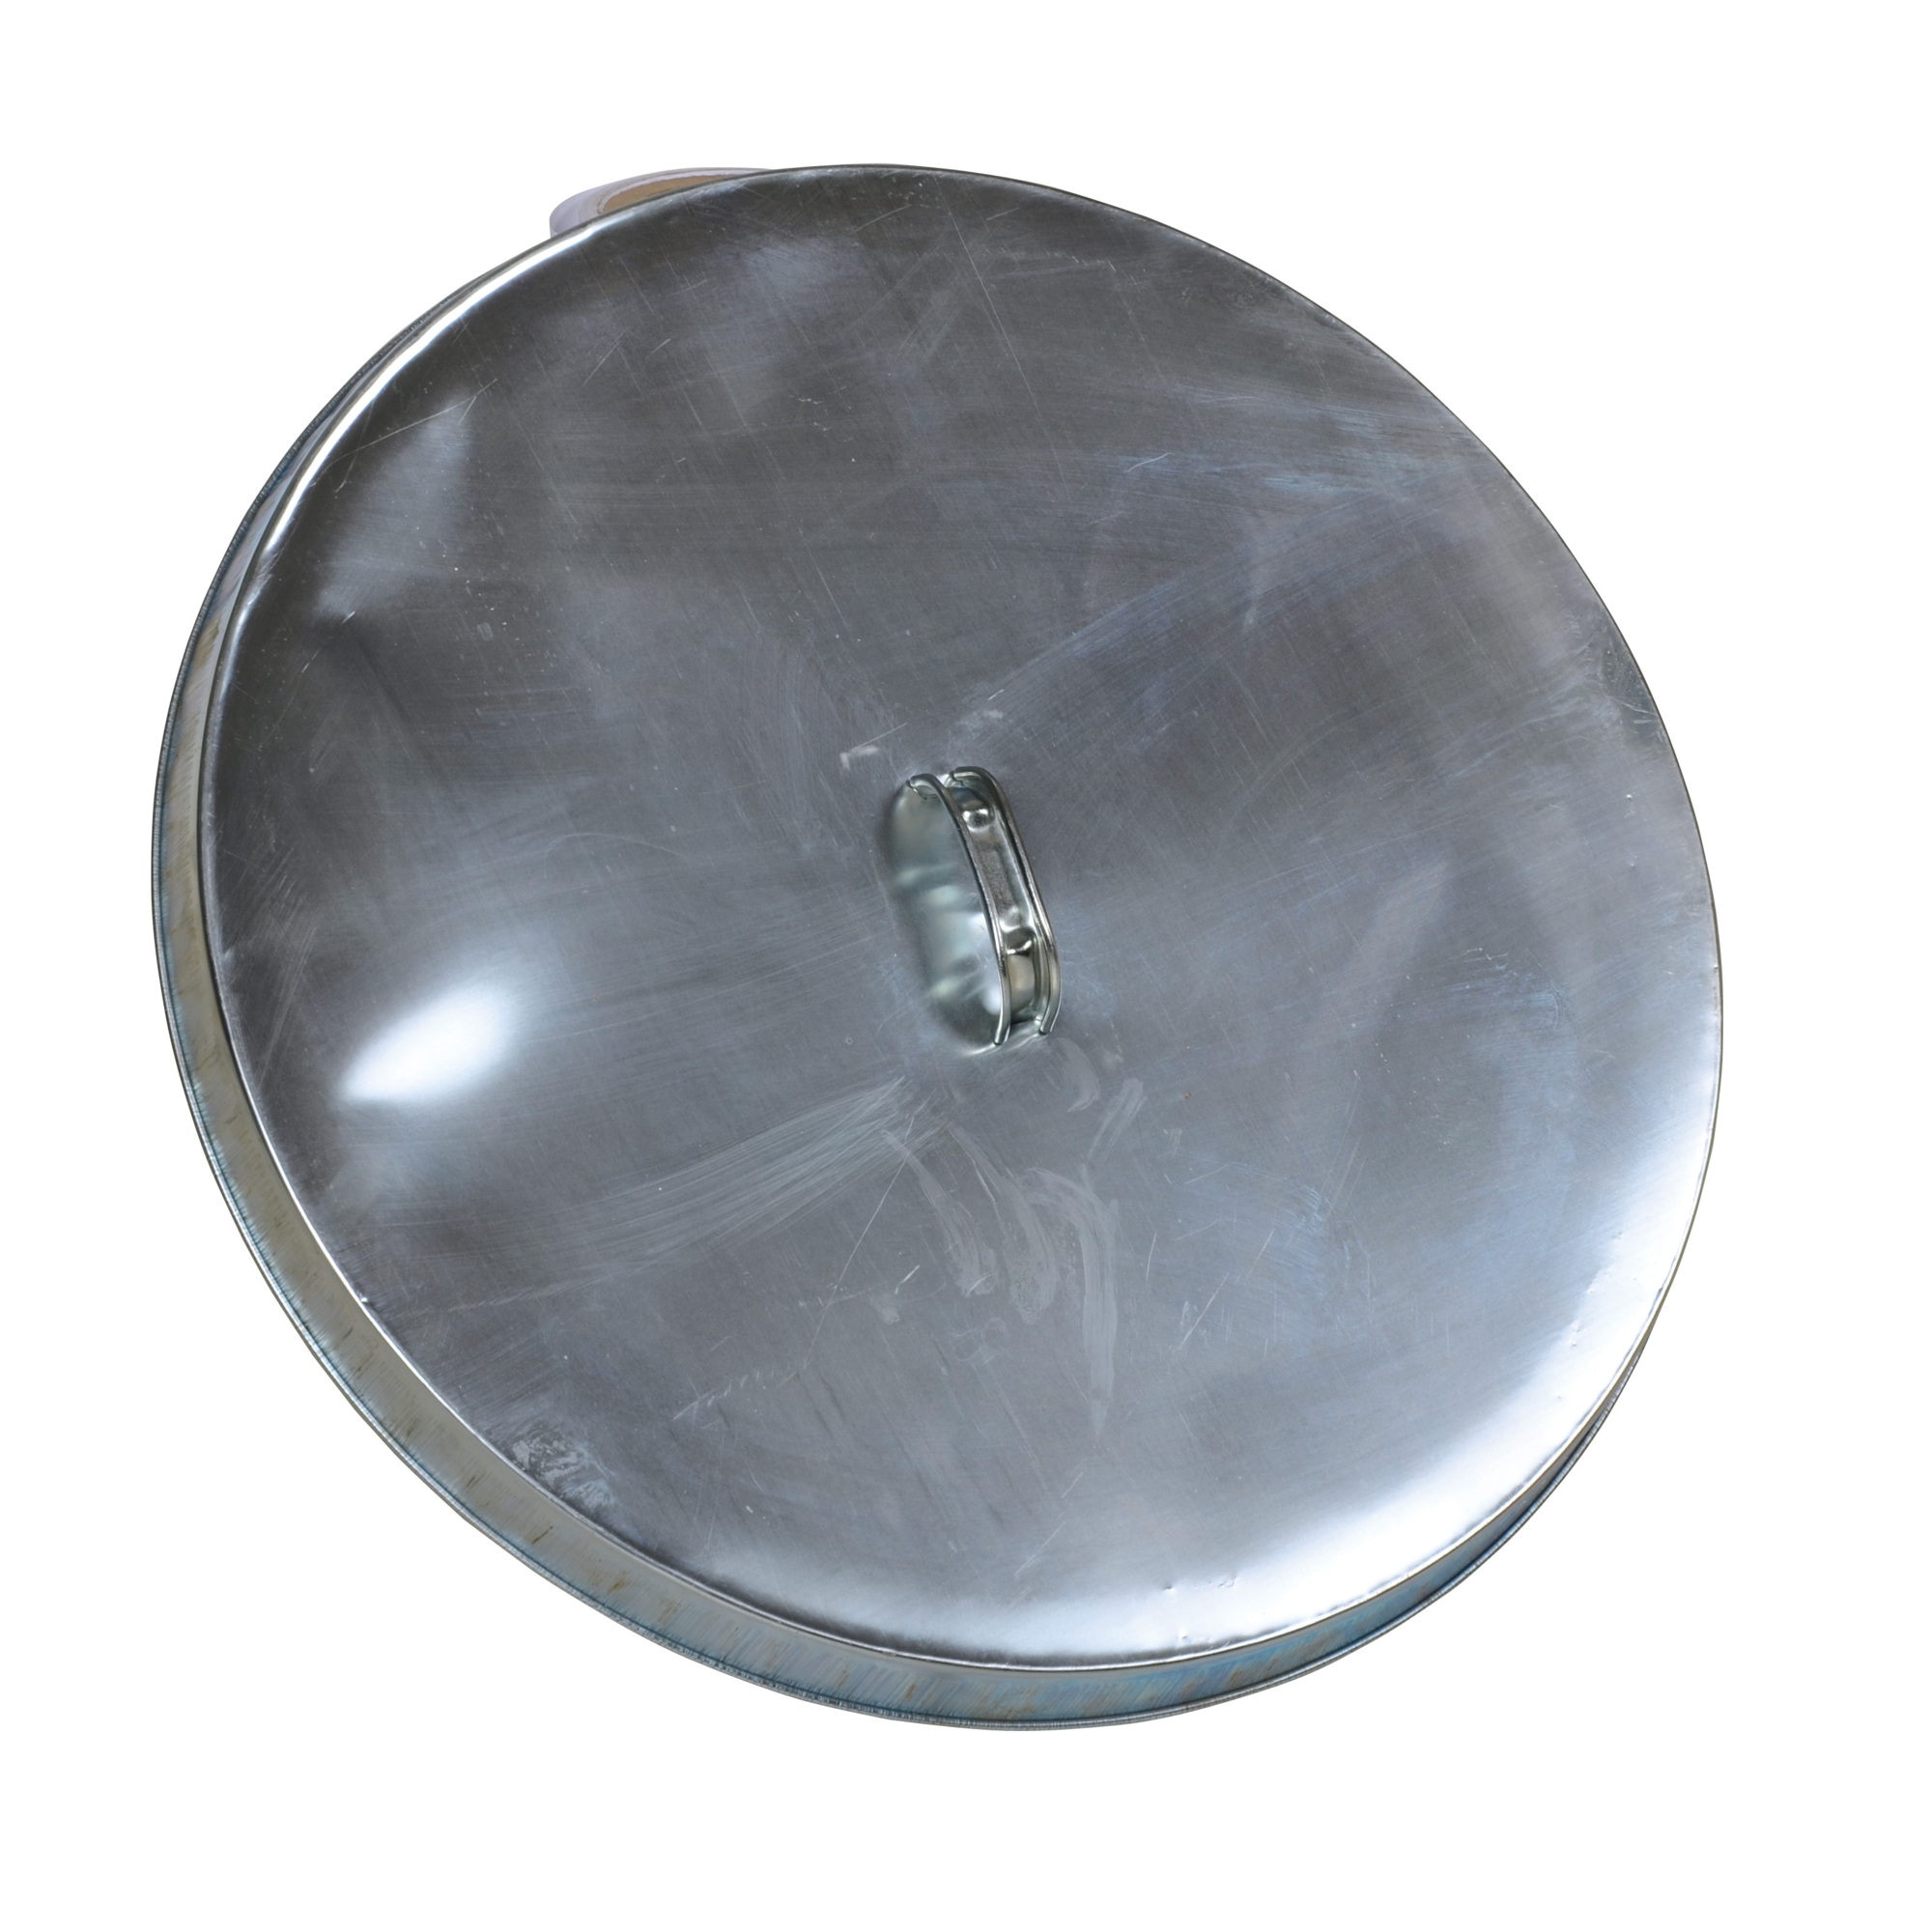 Vestil, Open head drum cover with handle, Diameter 25 in, Material Steel, Model DC-245-H